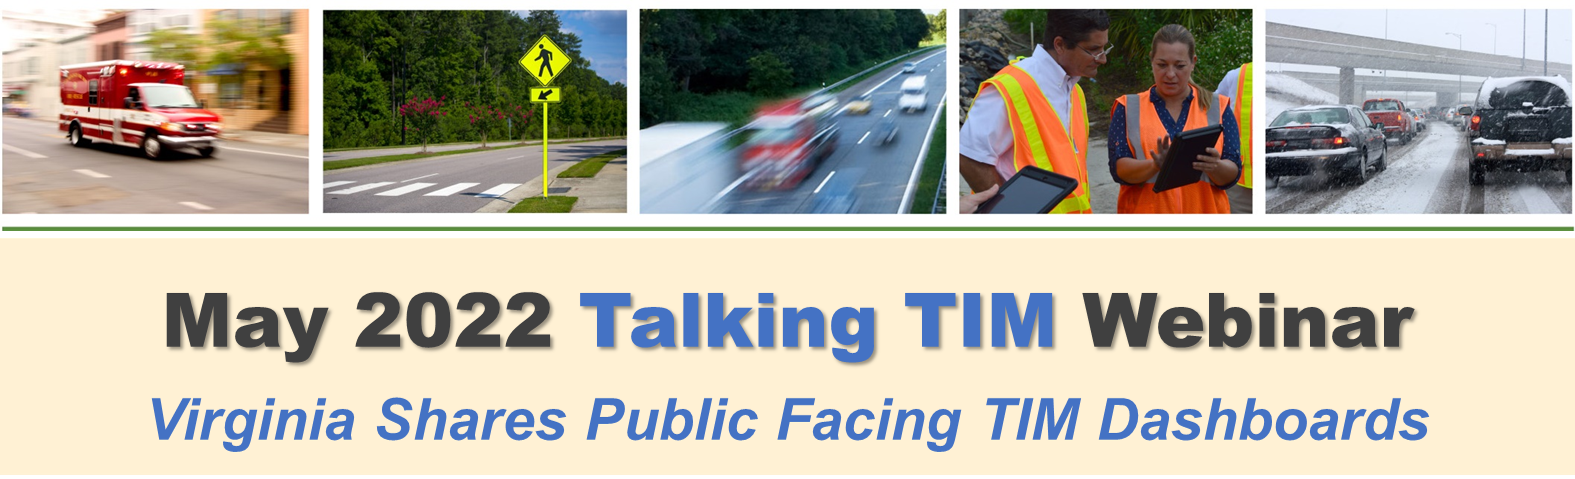 May 2022 Talking TIM Webinar:  Virginia Shares Public Facing TIM Dashboards 